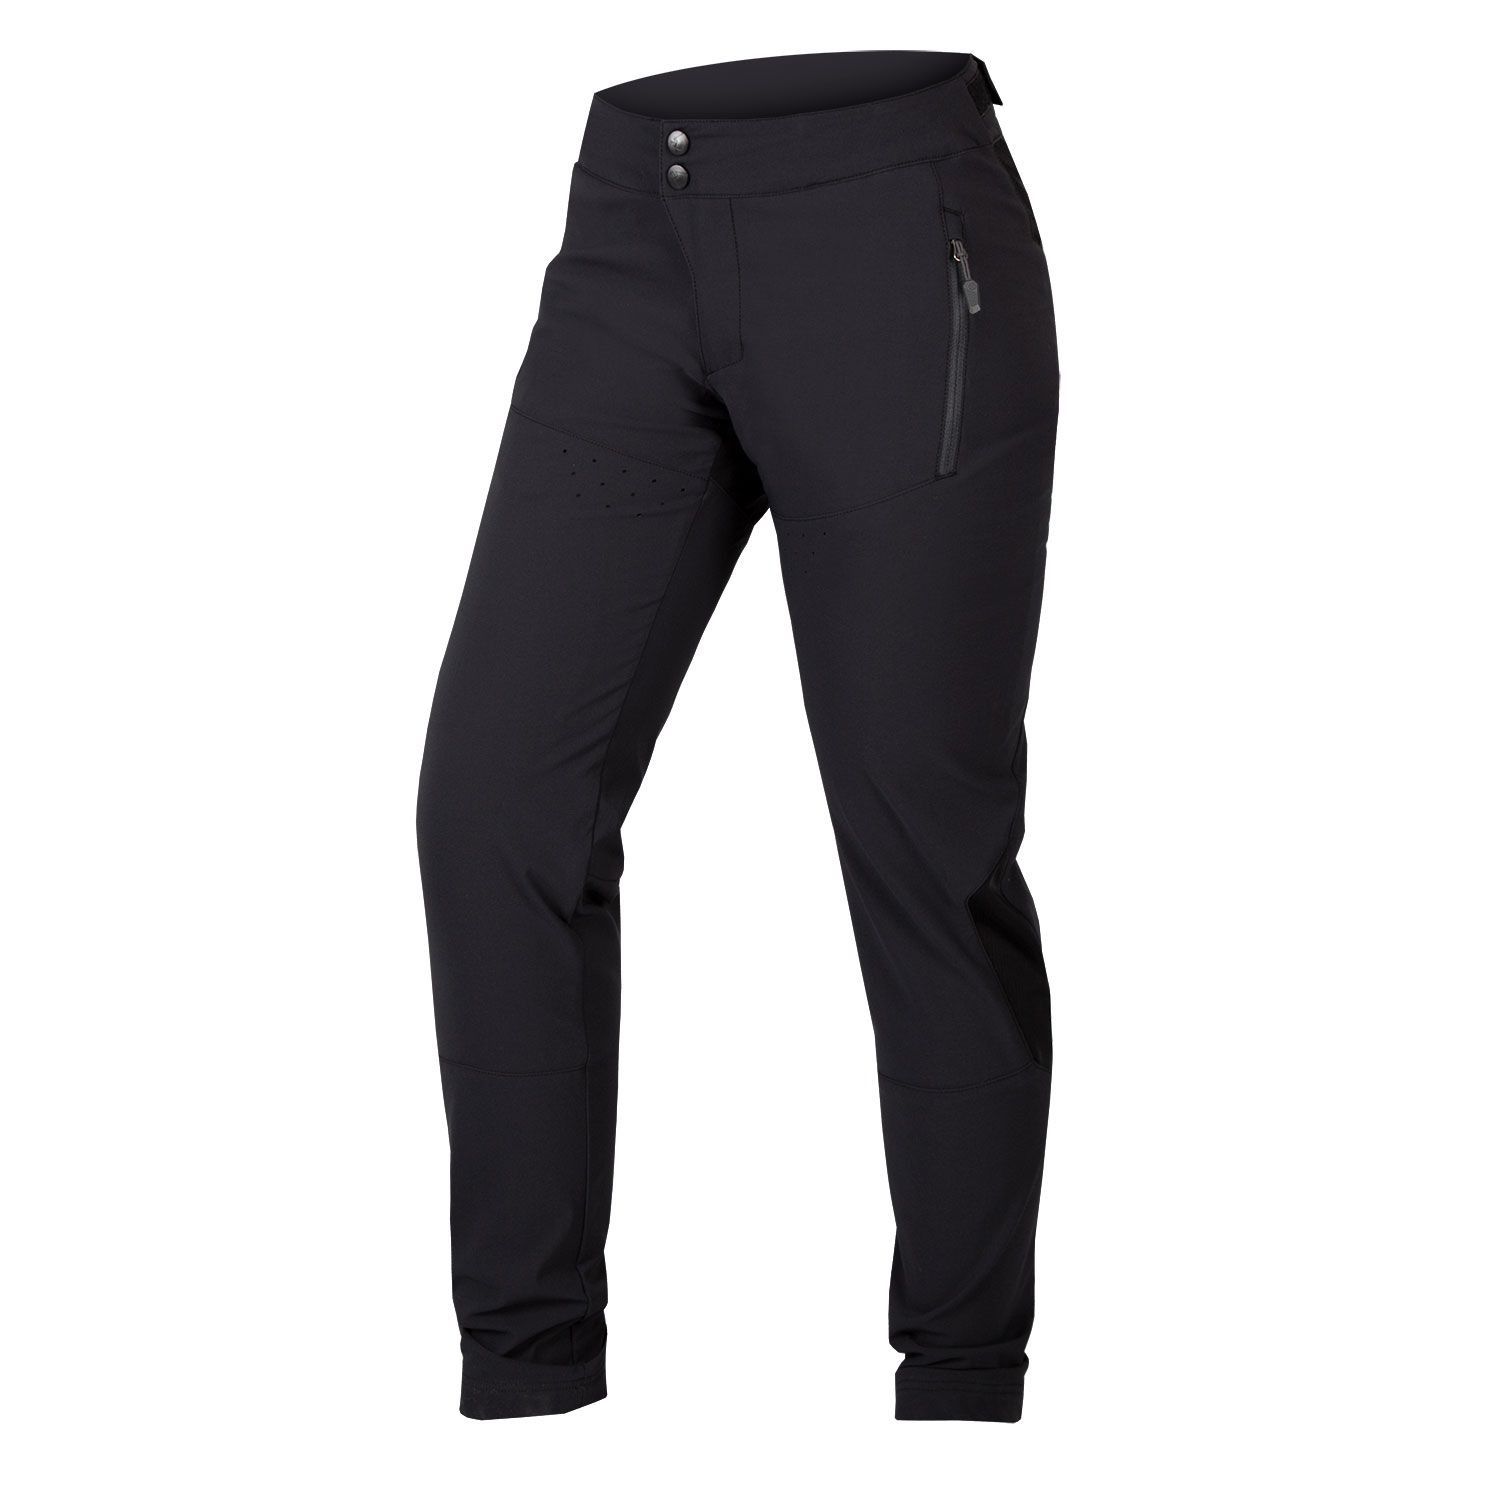 Endura Womens Mt500 Burner Pants - £97.74 | Trousers | Cyclestore